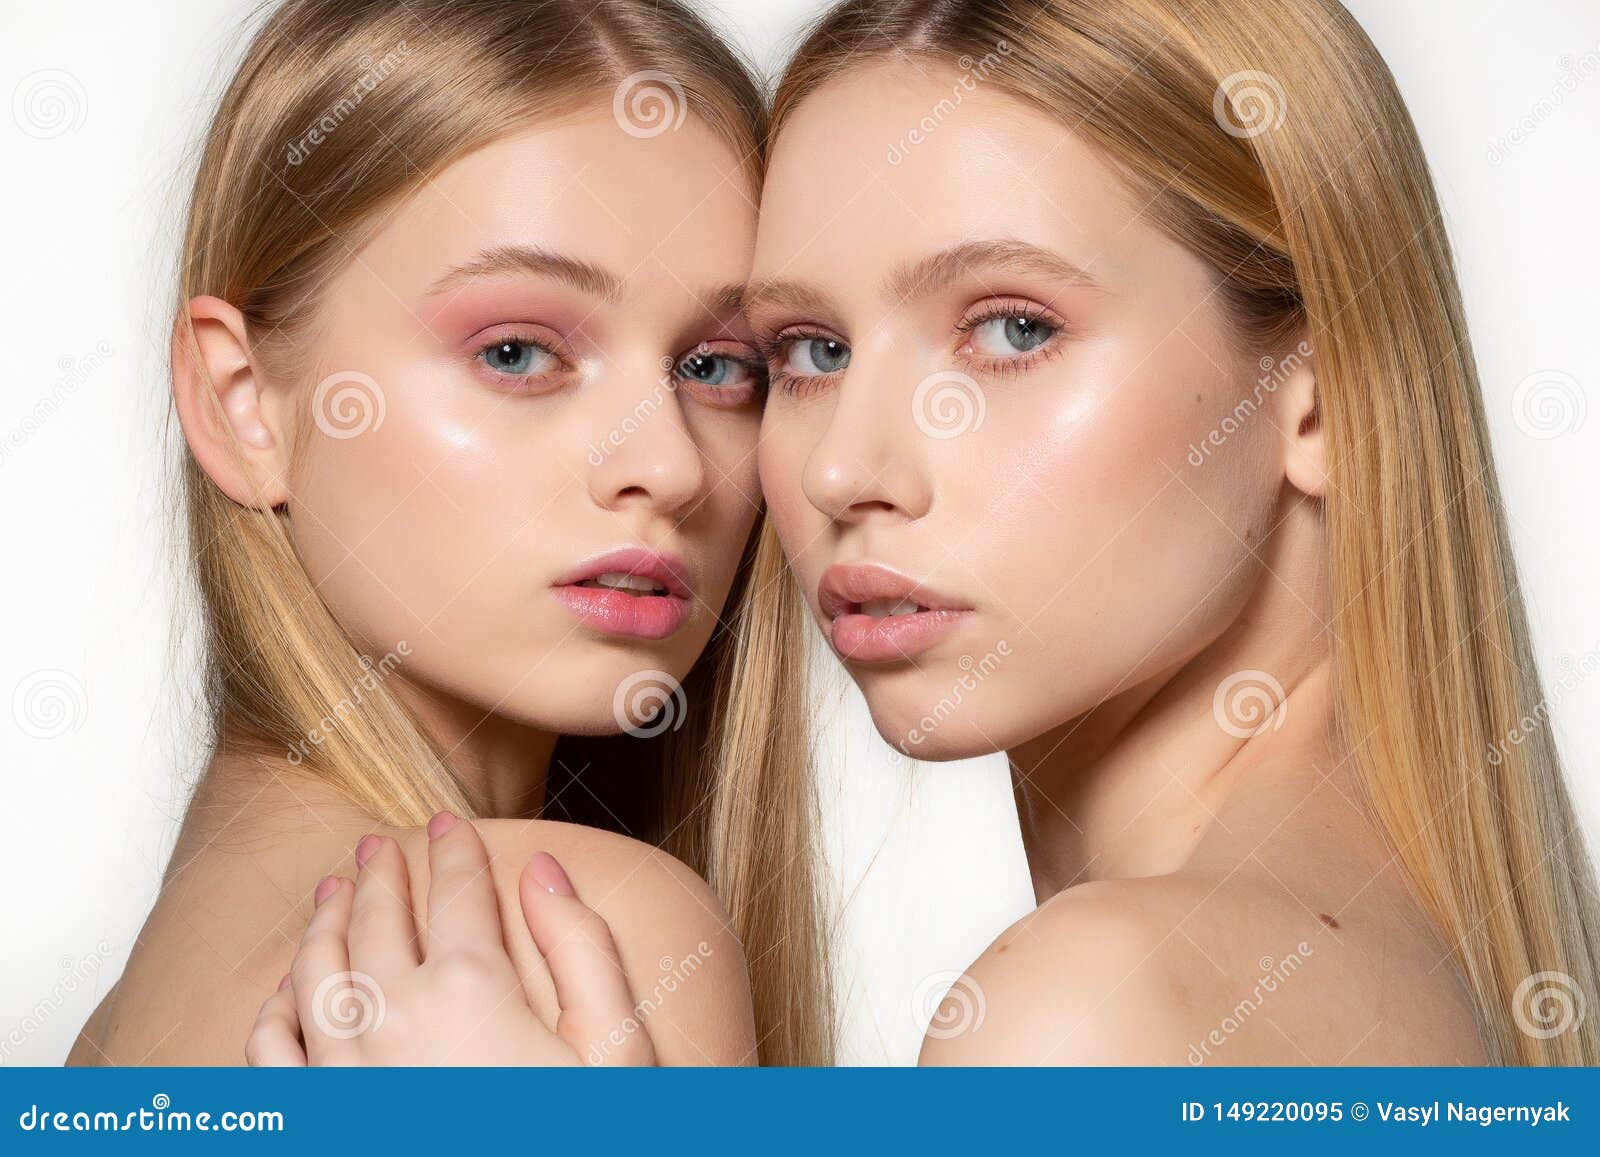 Olsen twins sexy picks